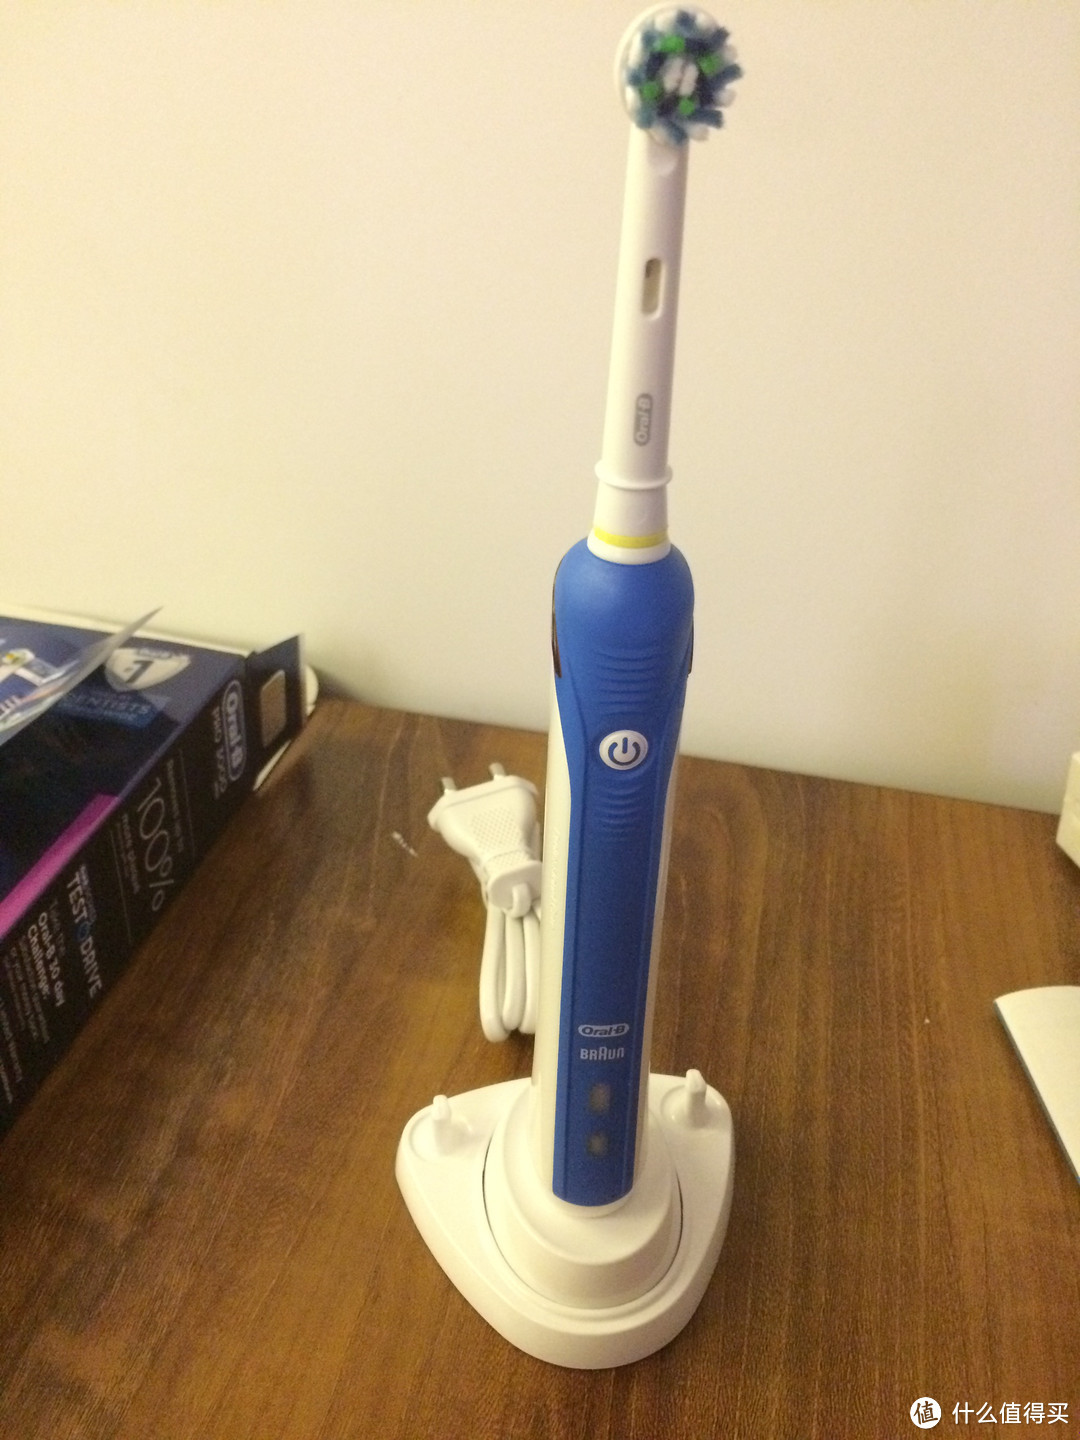 Oral-B 欧乐-B Pro 3000 电动牙刷 开箱体验